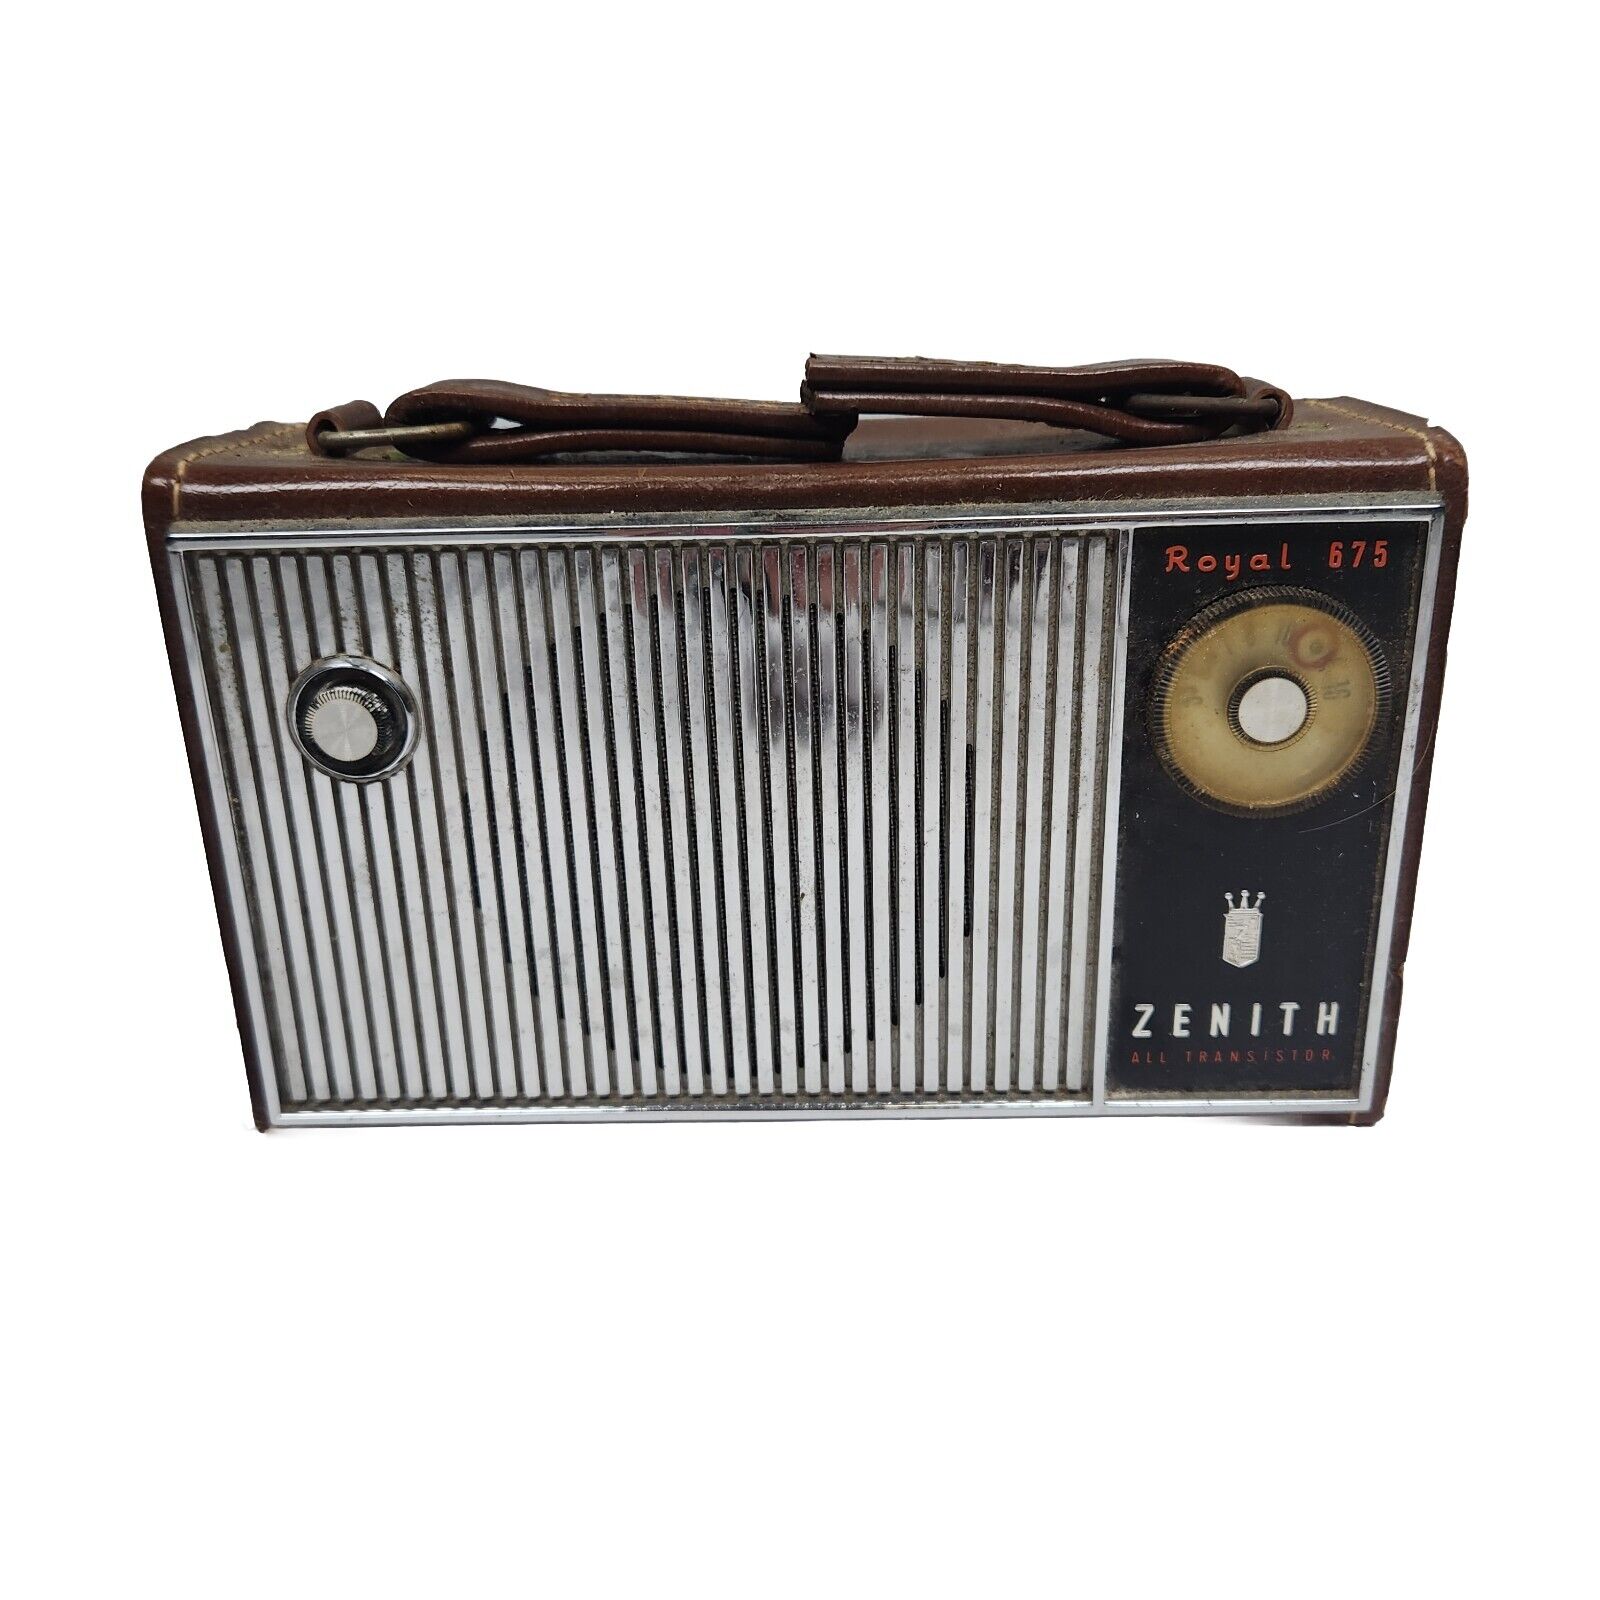 Vintage Zenith Royal 675G Portable All Transistor Radio